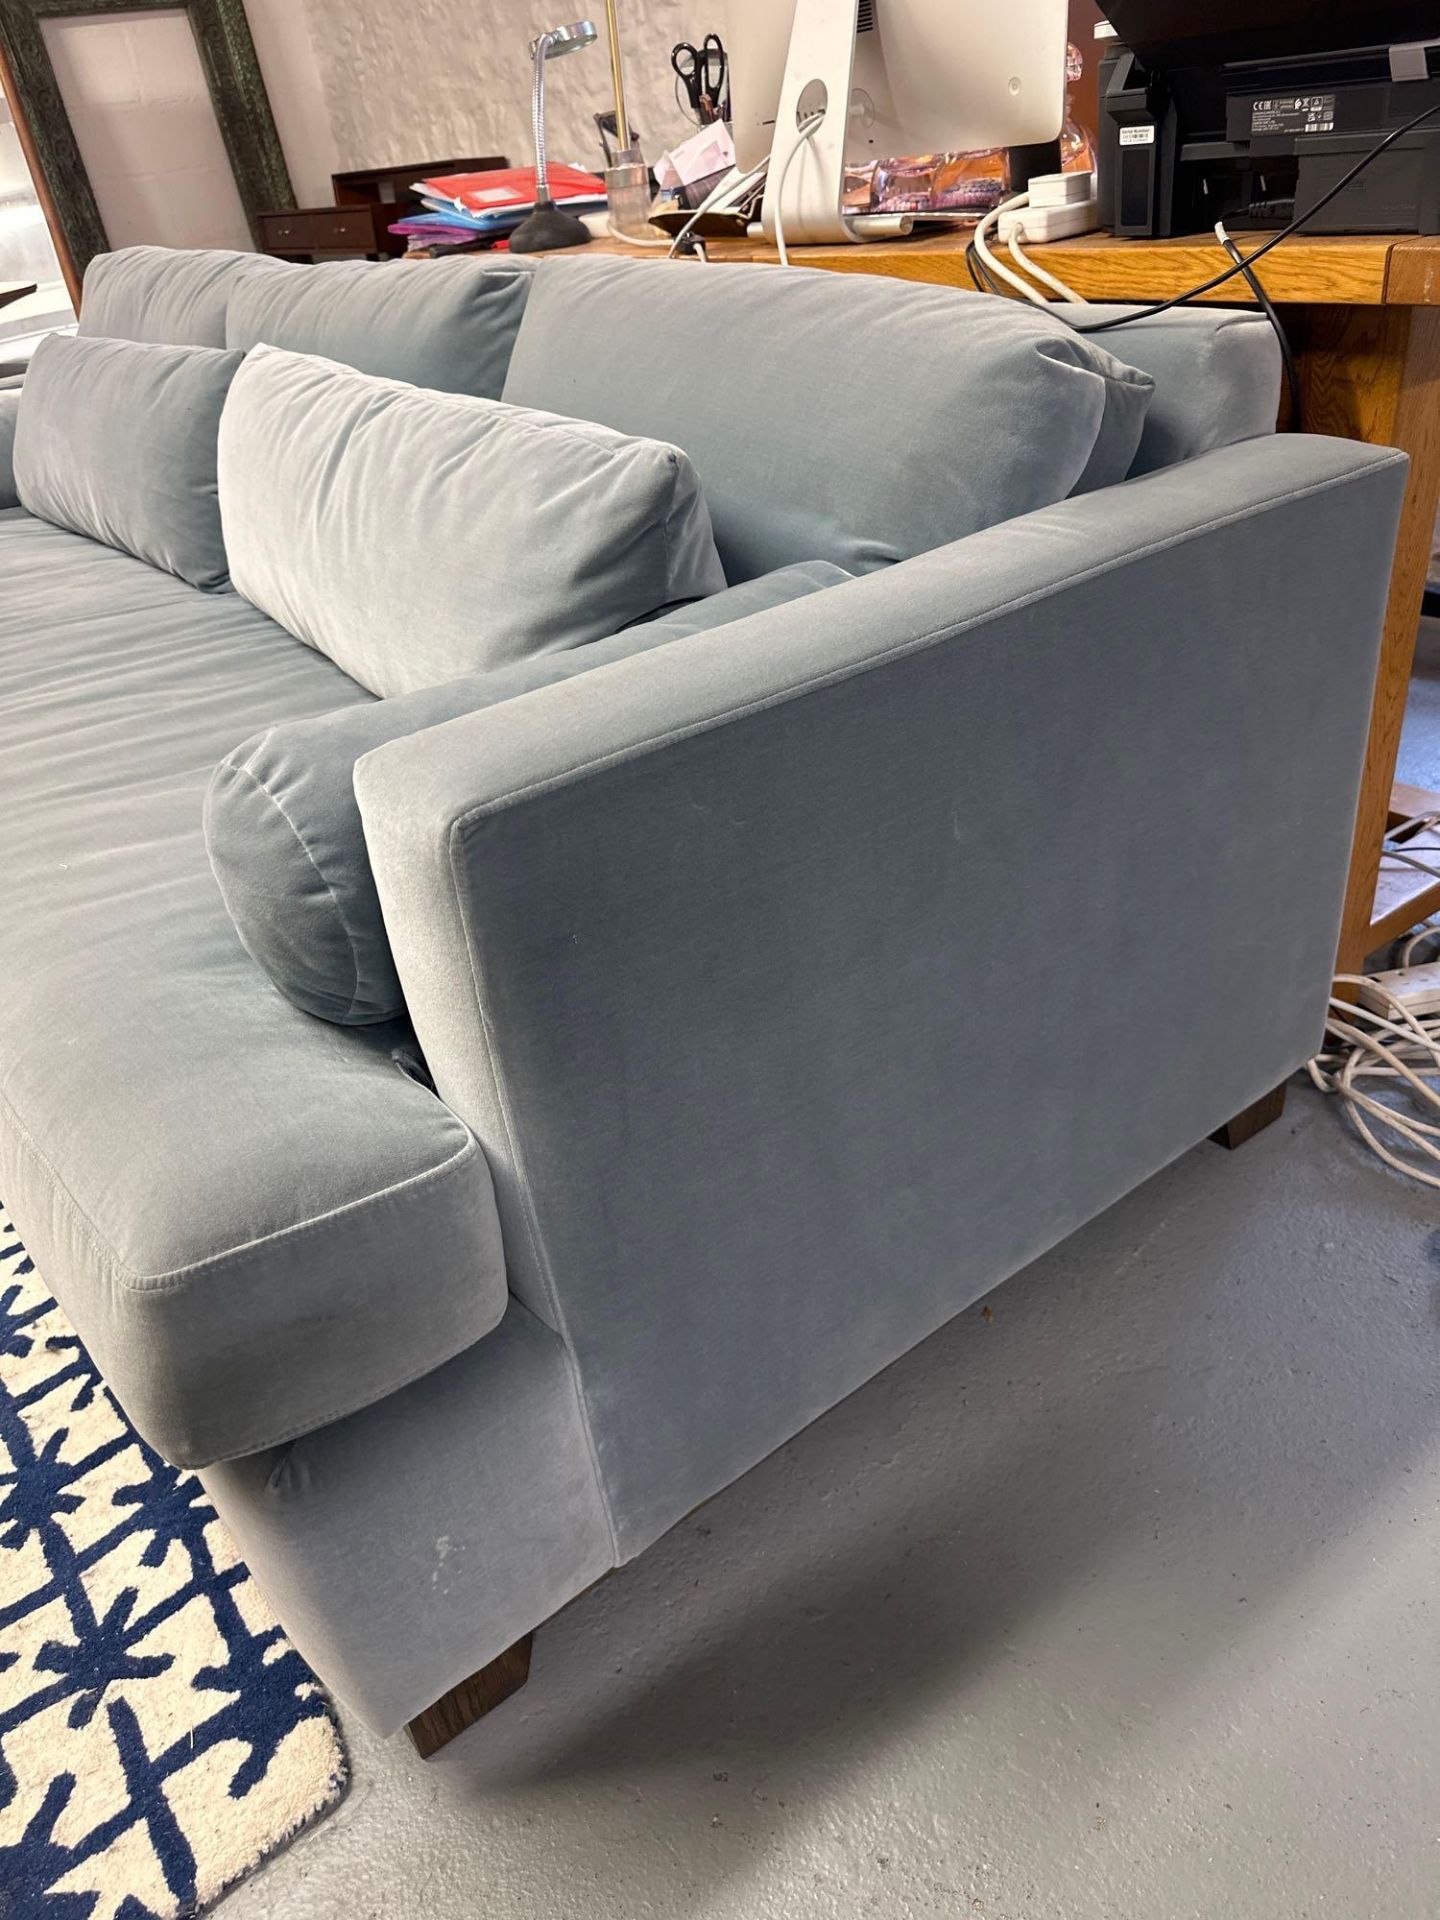 Eveleyn Sofa Deep Media sofa in Teal cotton velvet - An incredibly spacious and comfortable sofa - Bild 3 aus 3